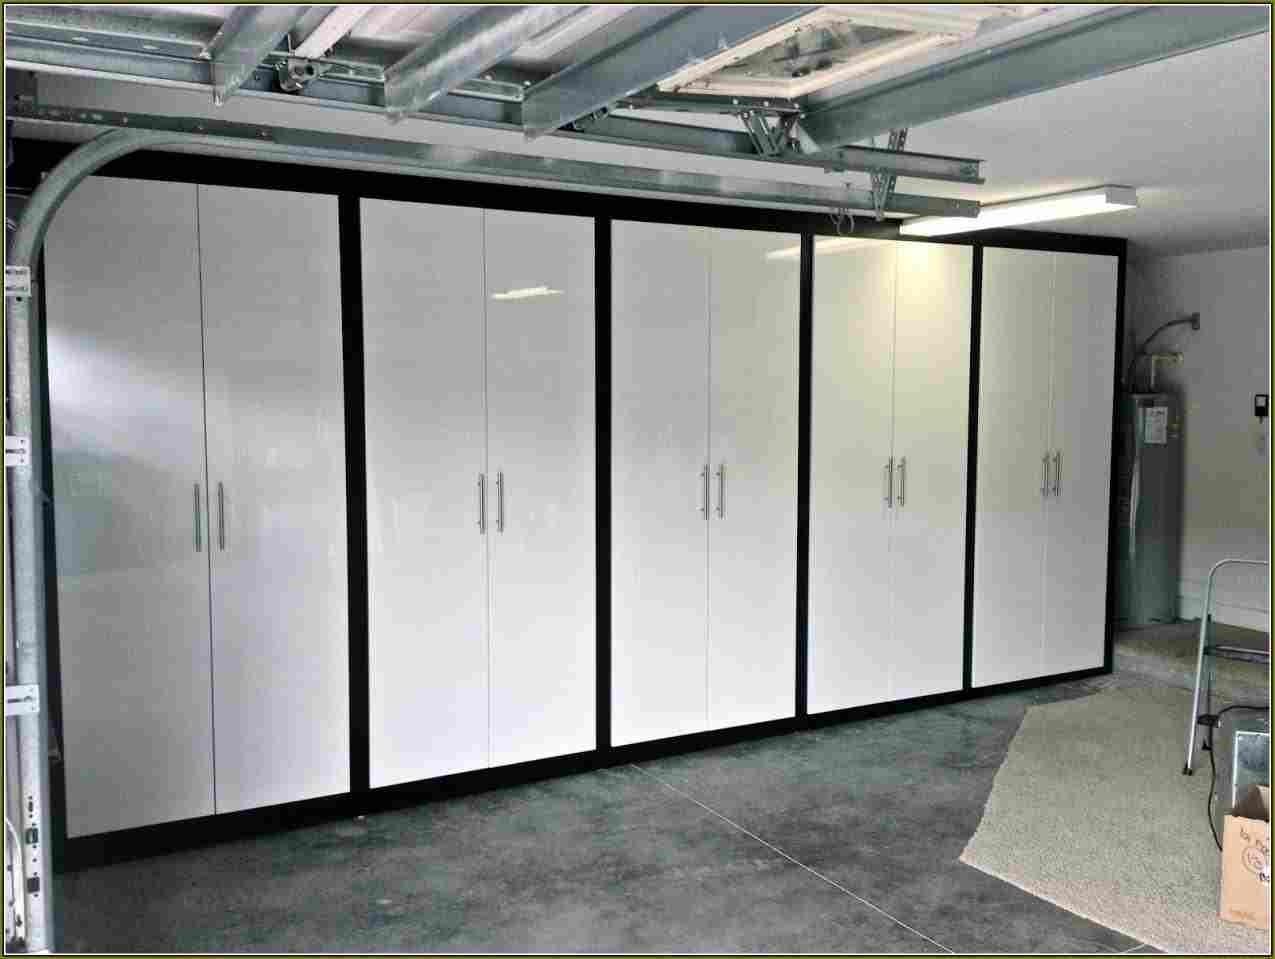 Garage Storage Units With Doors